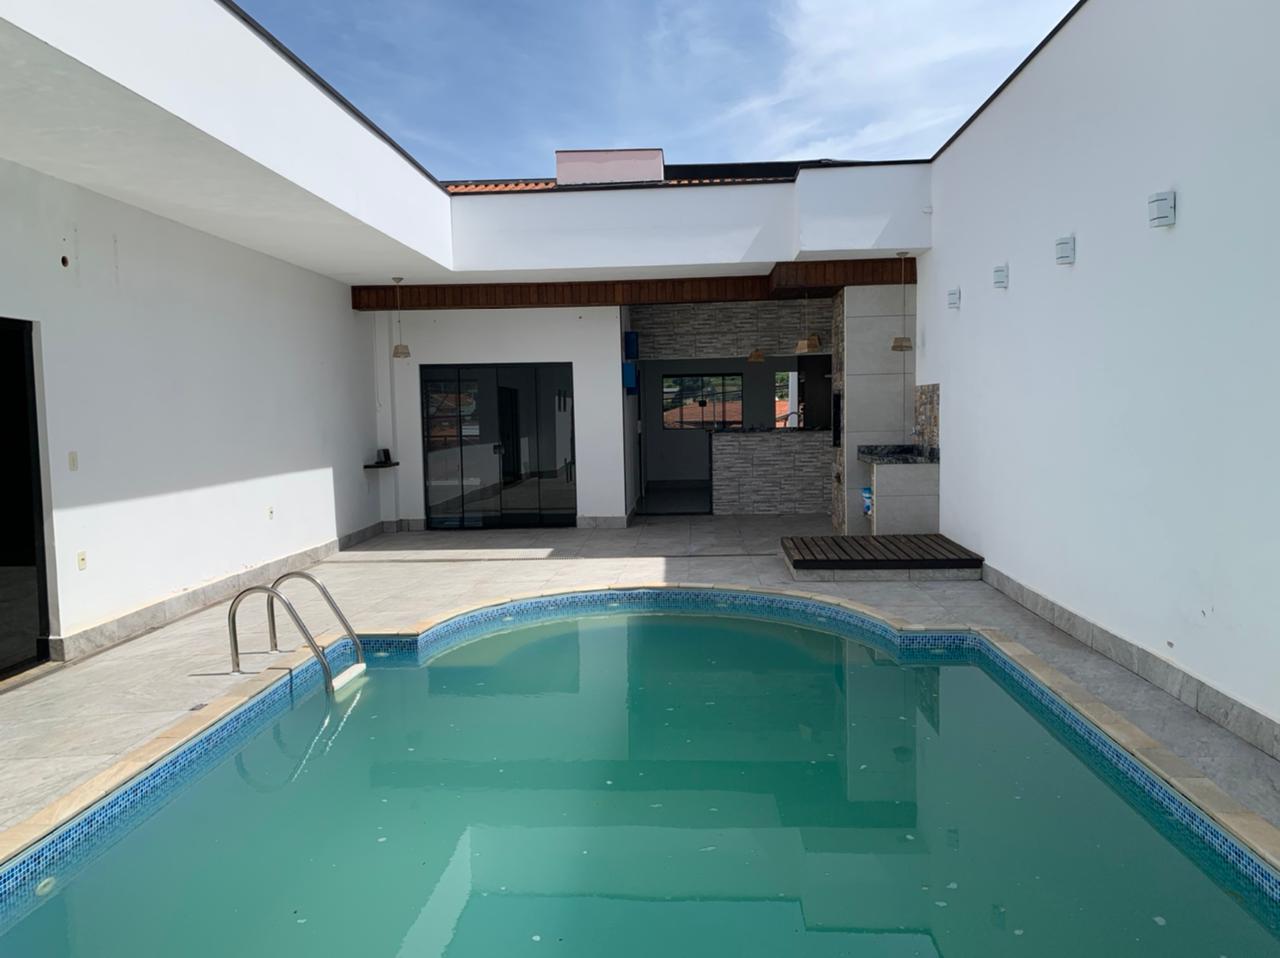 Casa – Rua Benedito Luiz de Godoy – 2 dormitórios com piscina – R$ 600 mil